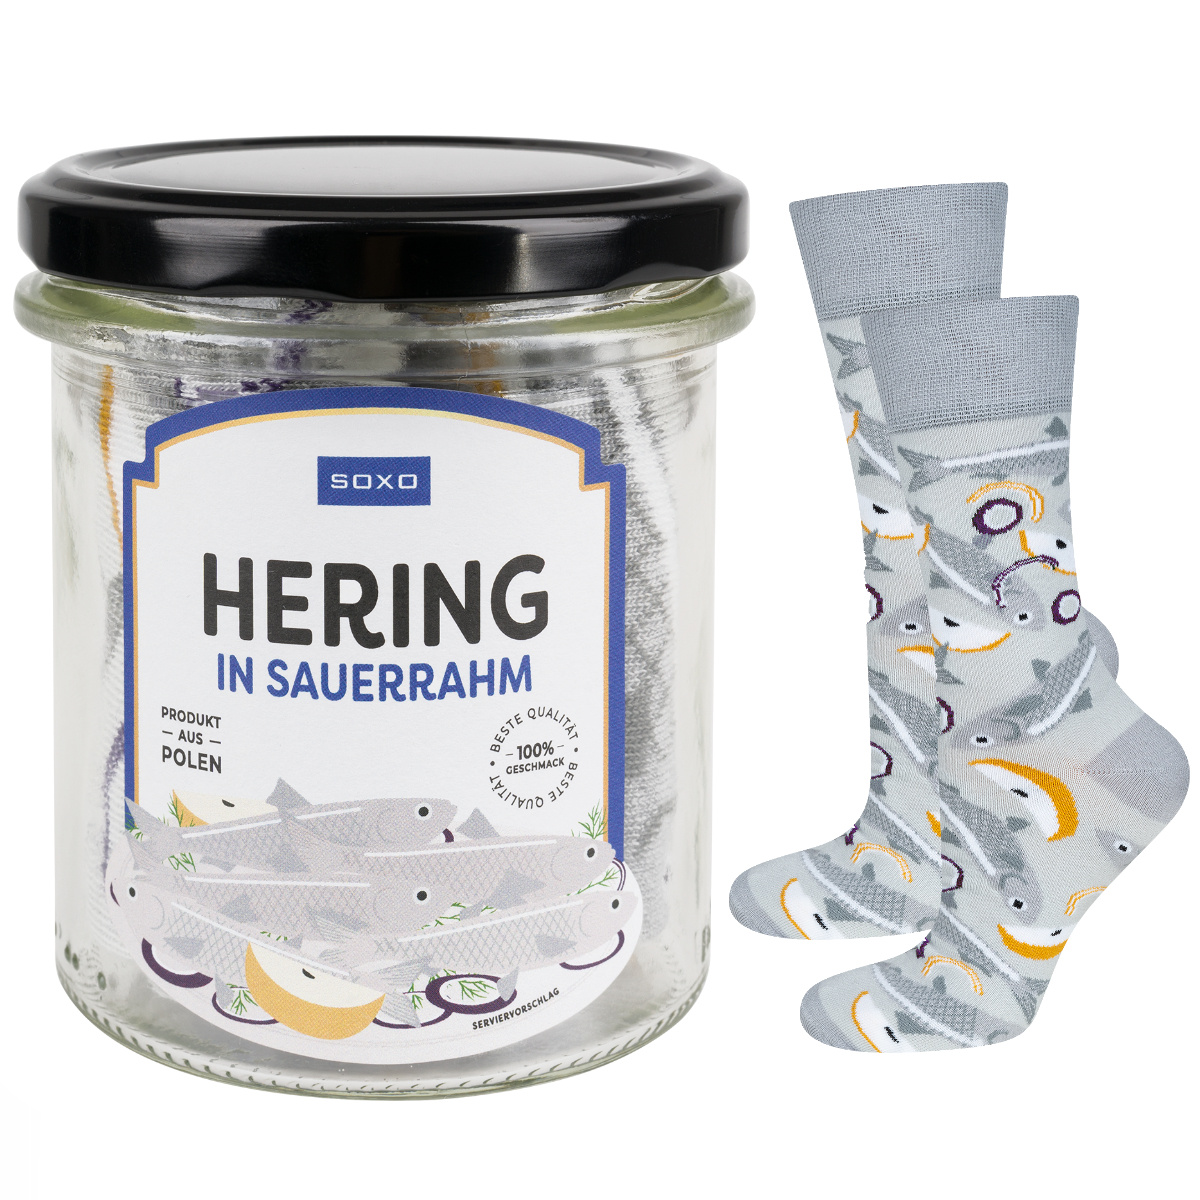 Herring in a gift jar